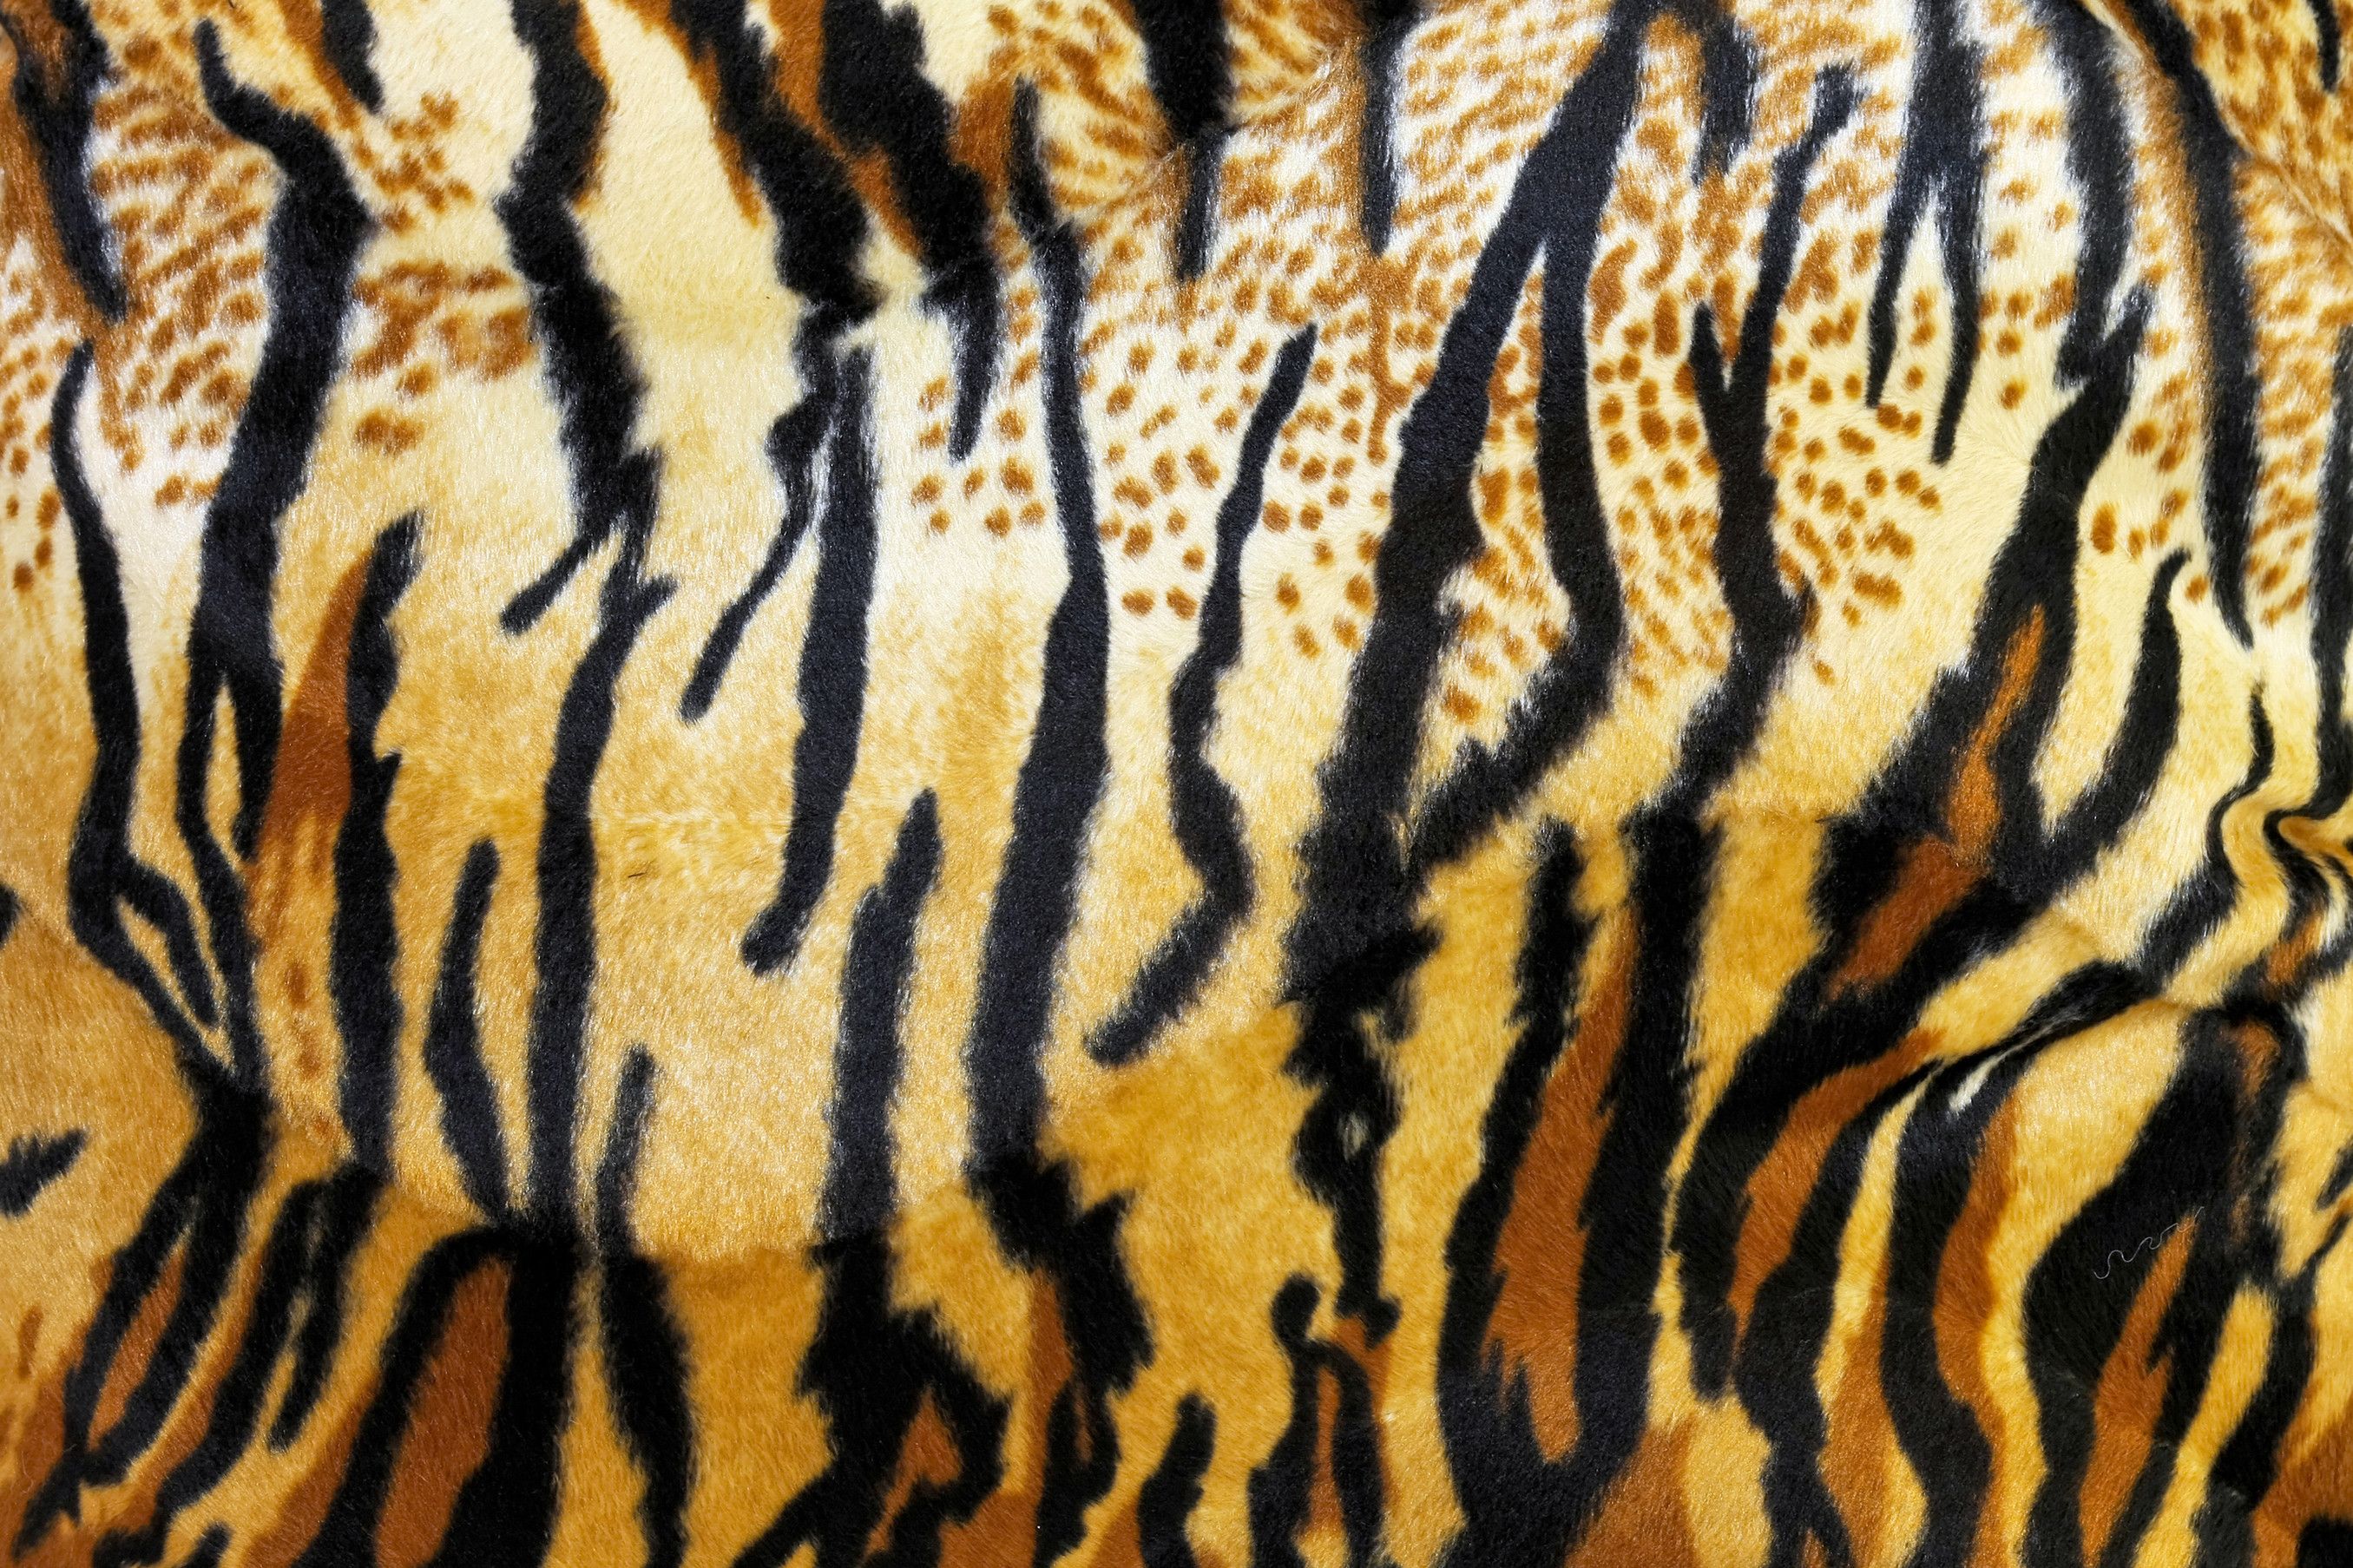 Download wallpaper: skin tiger, photo, download